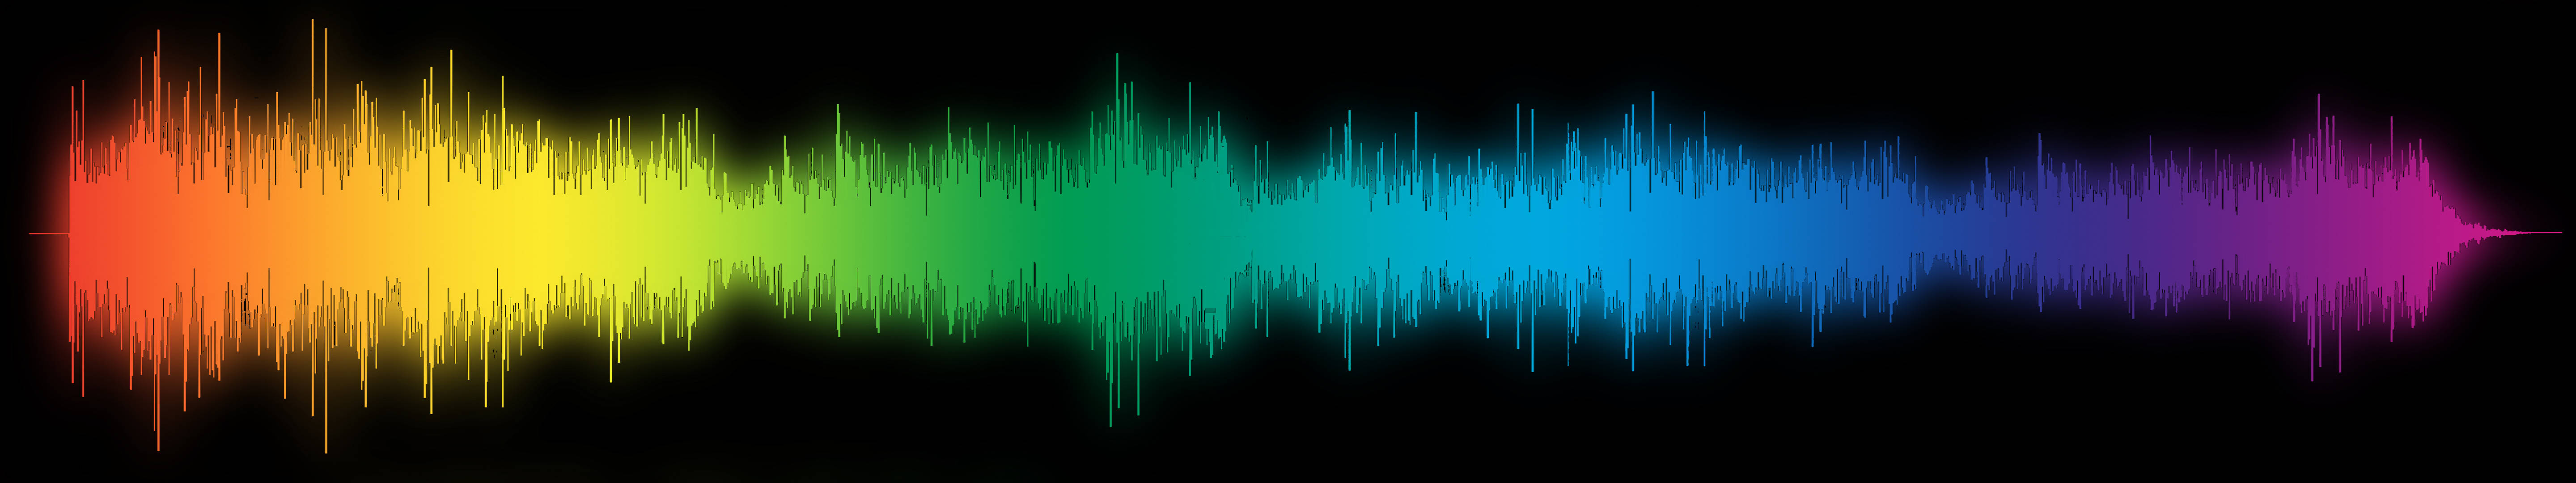 Rainbow Sound Waves Three Screen Wallpaper